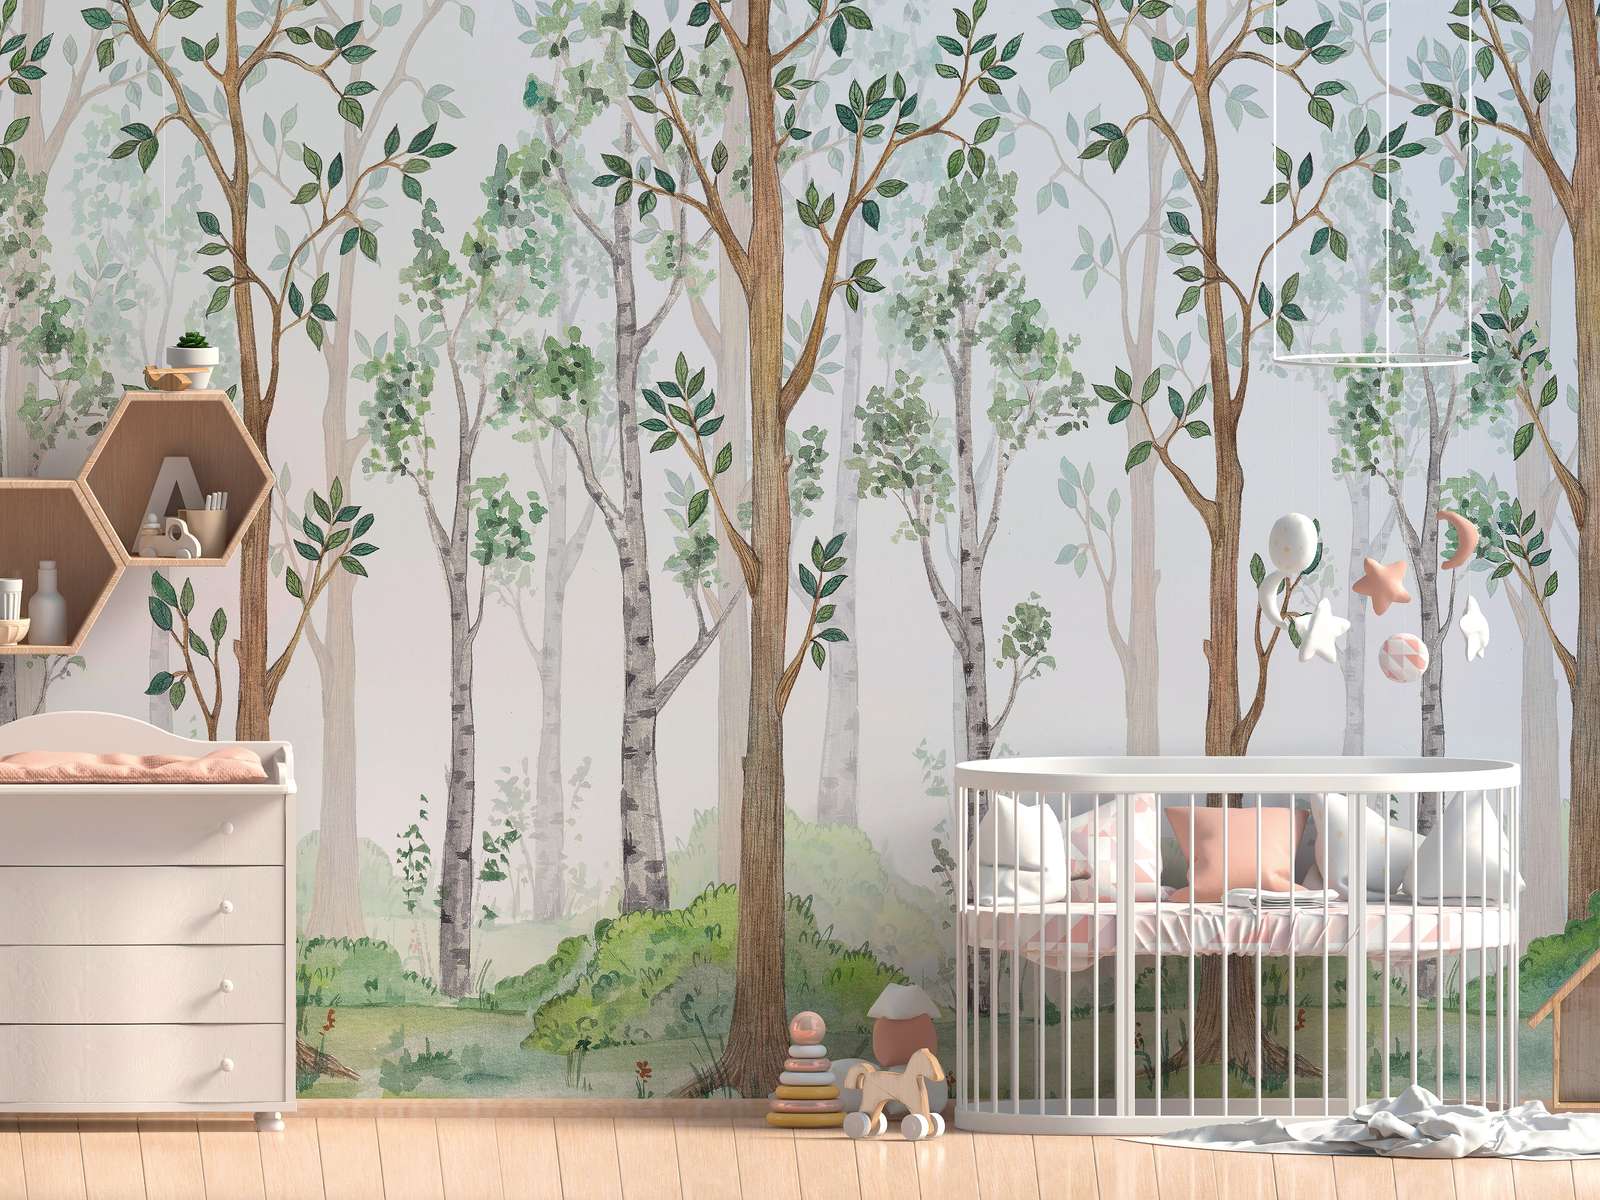             Mural de pared con bosque pintado para habitación infantil - Verde, Marrón, Blanco
        